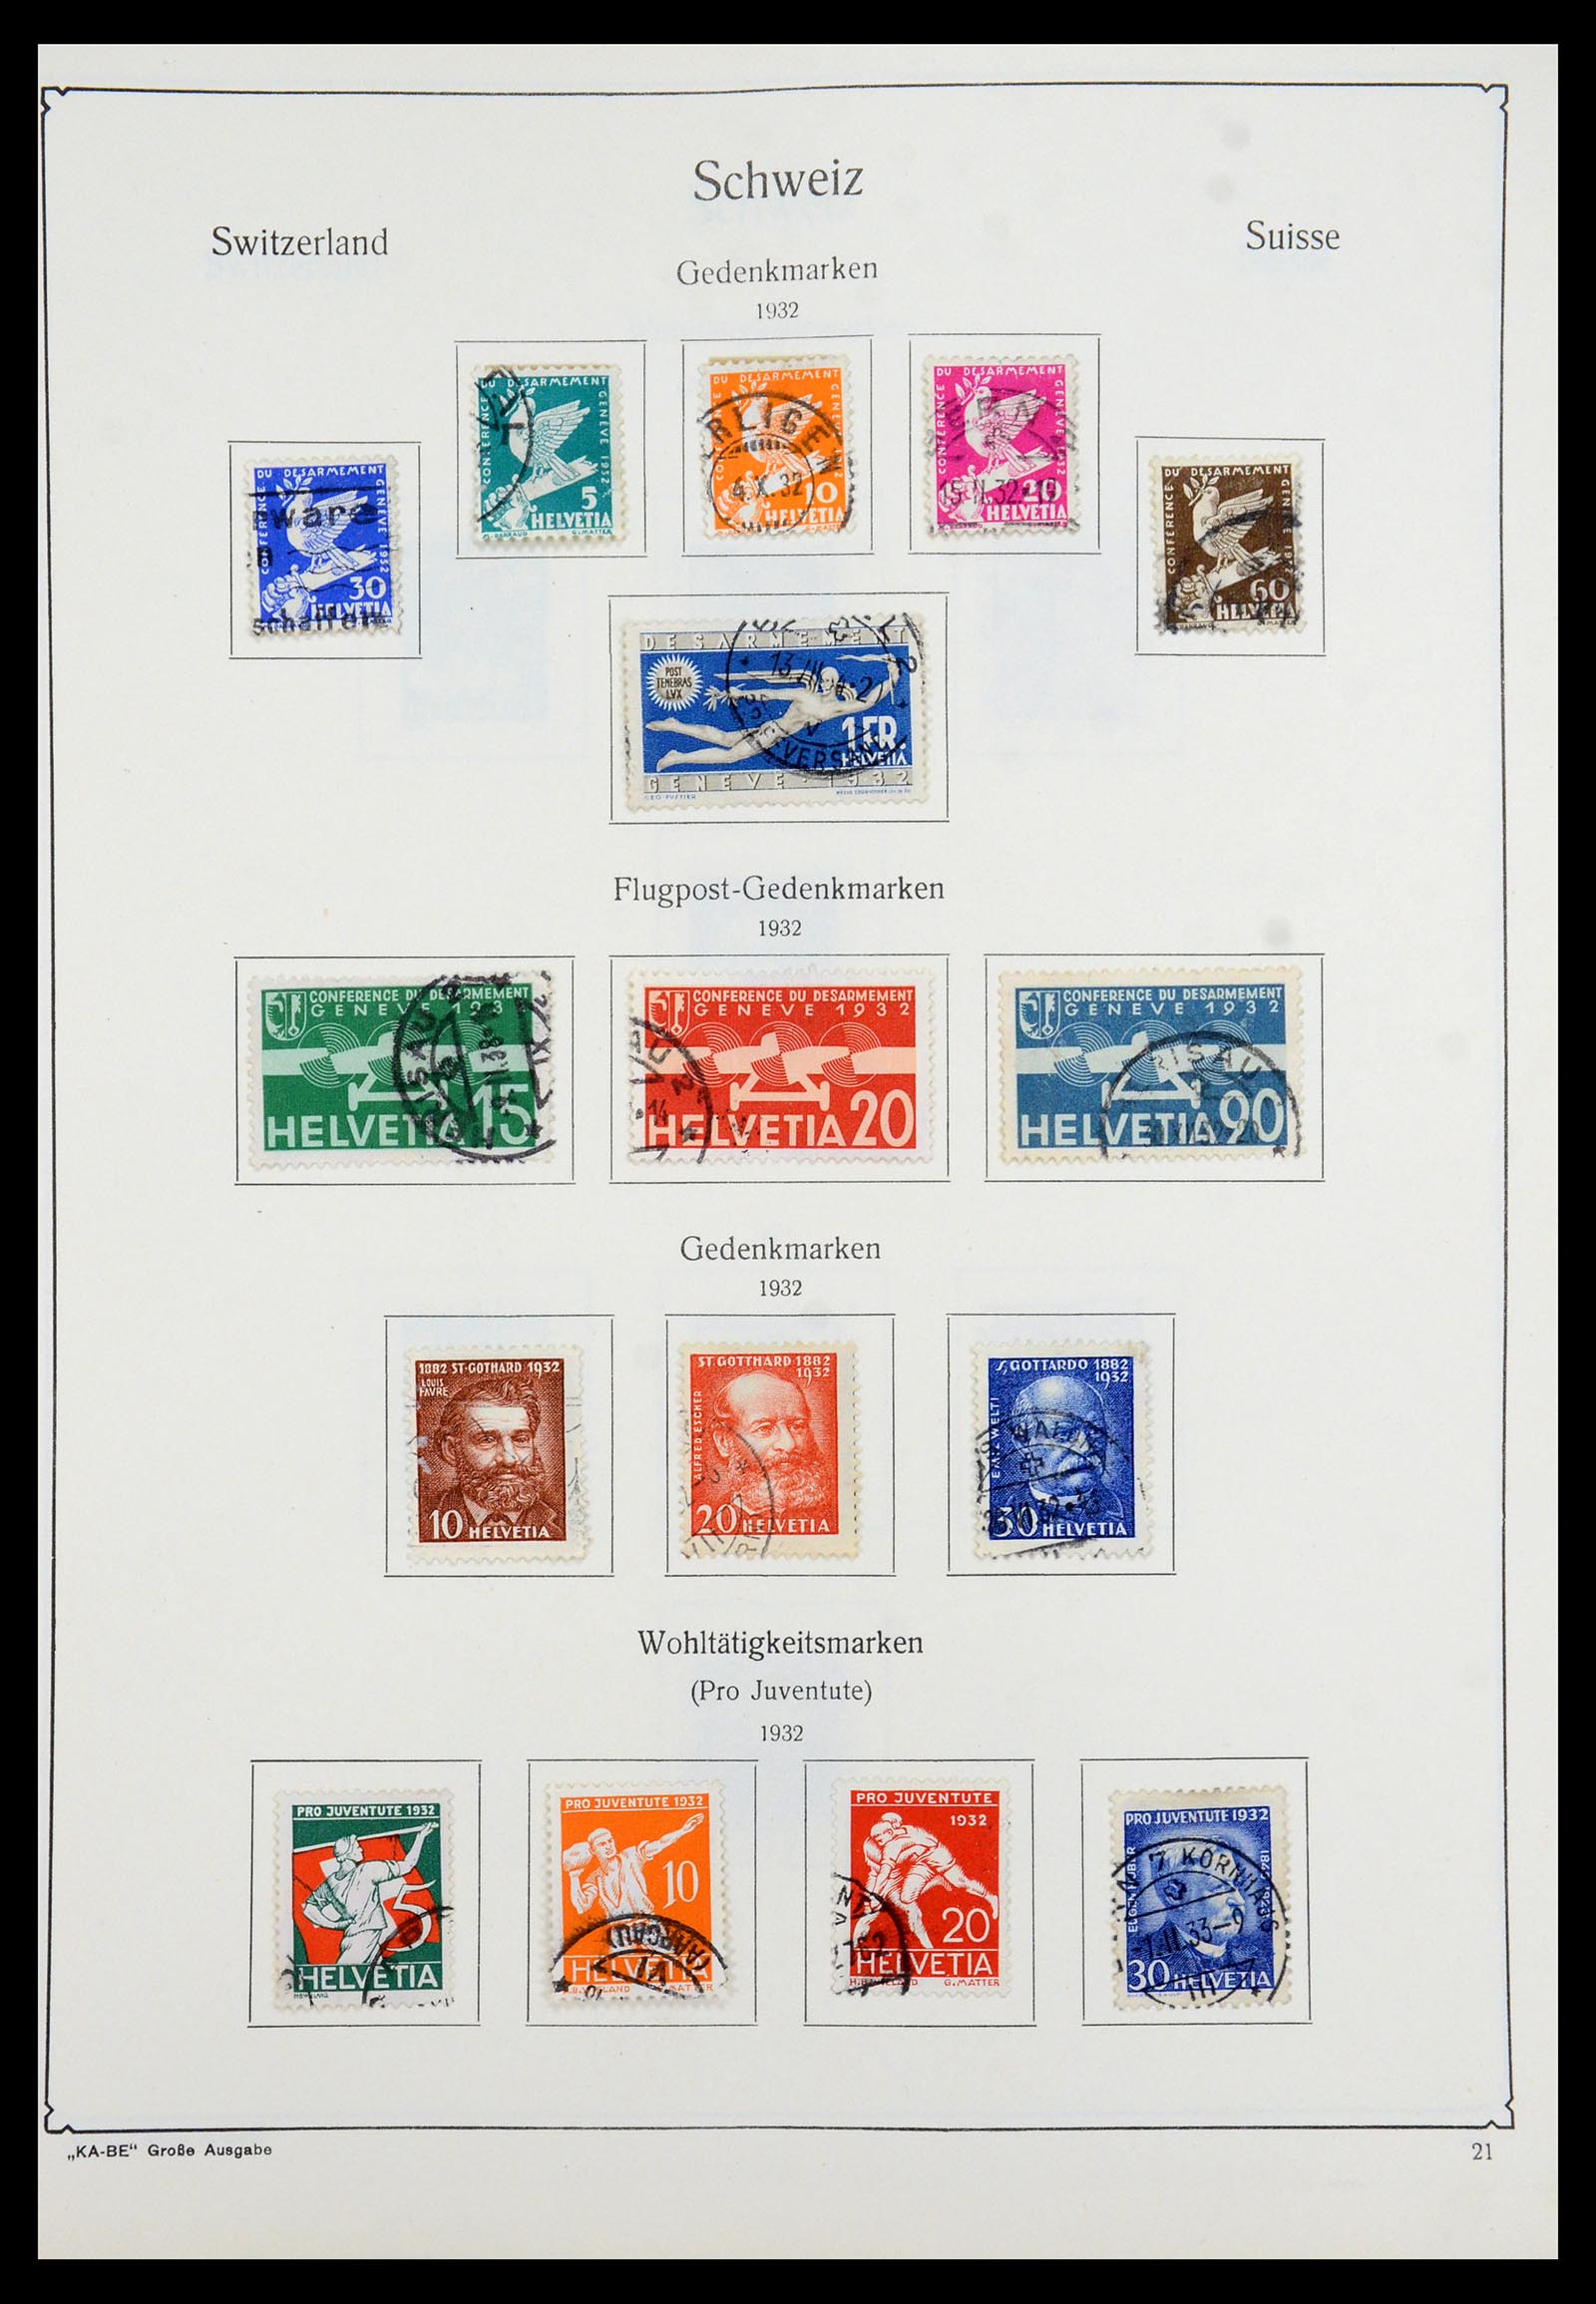 35756 021 - Stamp Collection 35756 Switzerland 1854-1963.